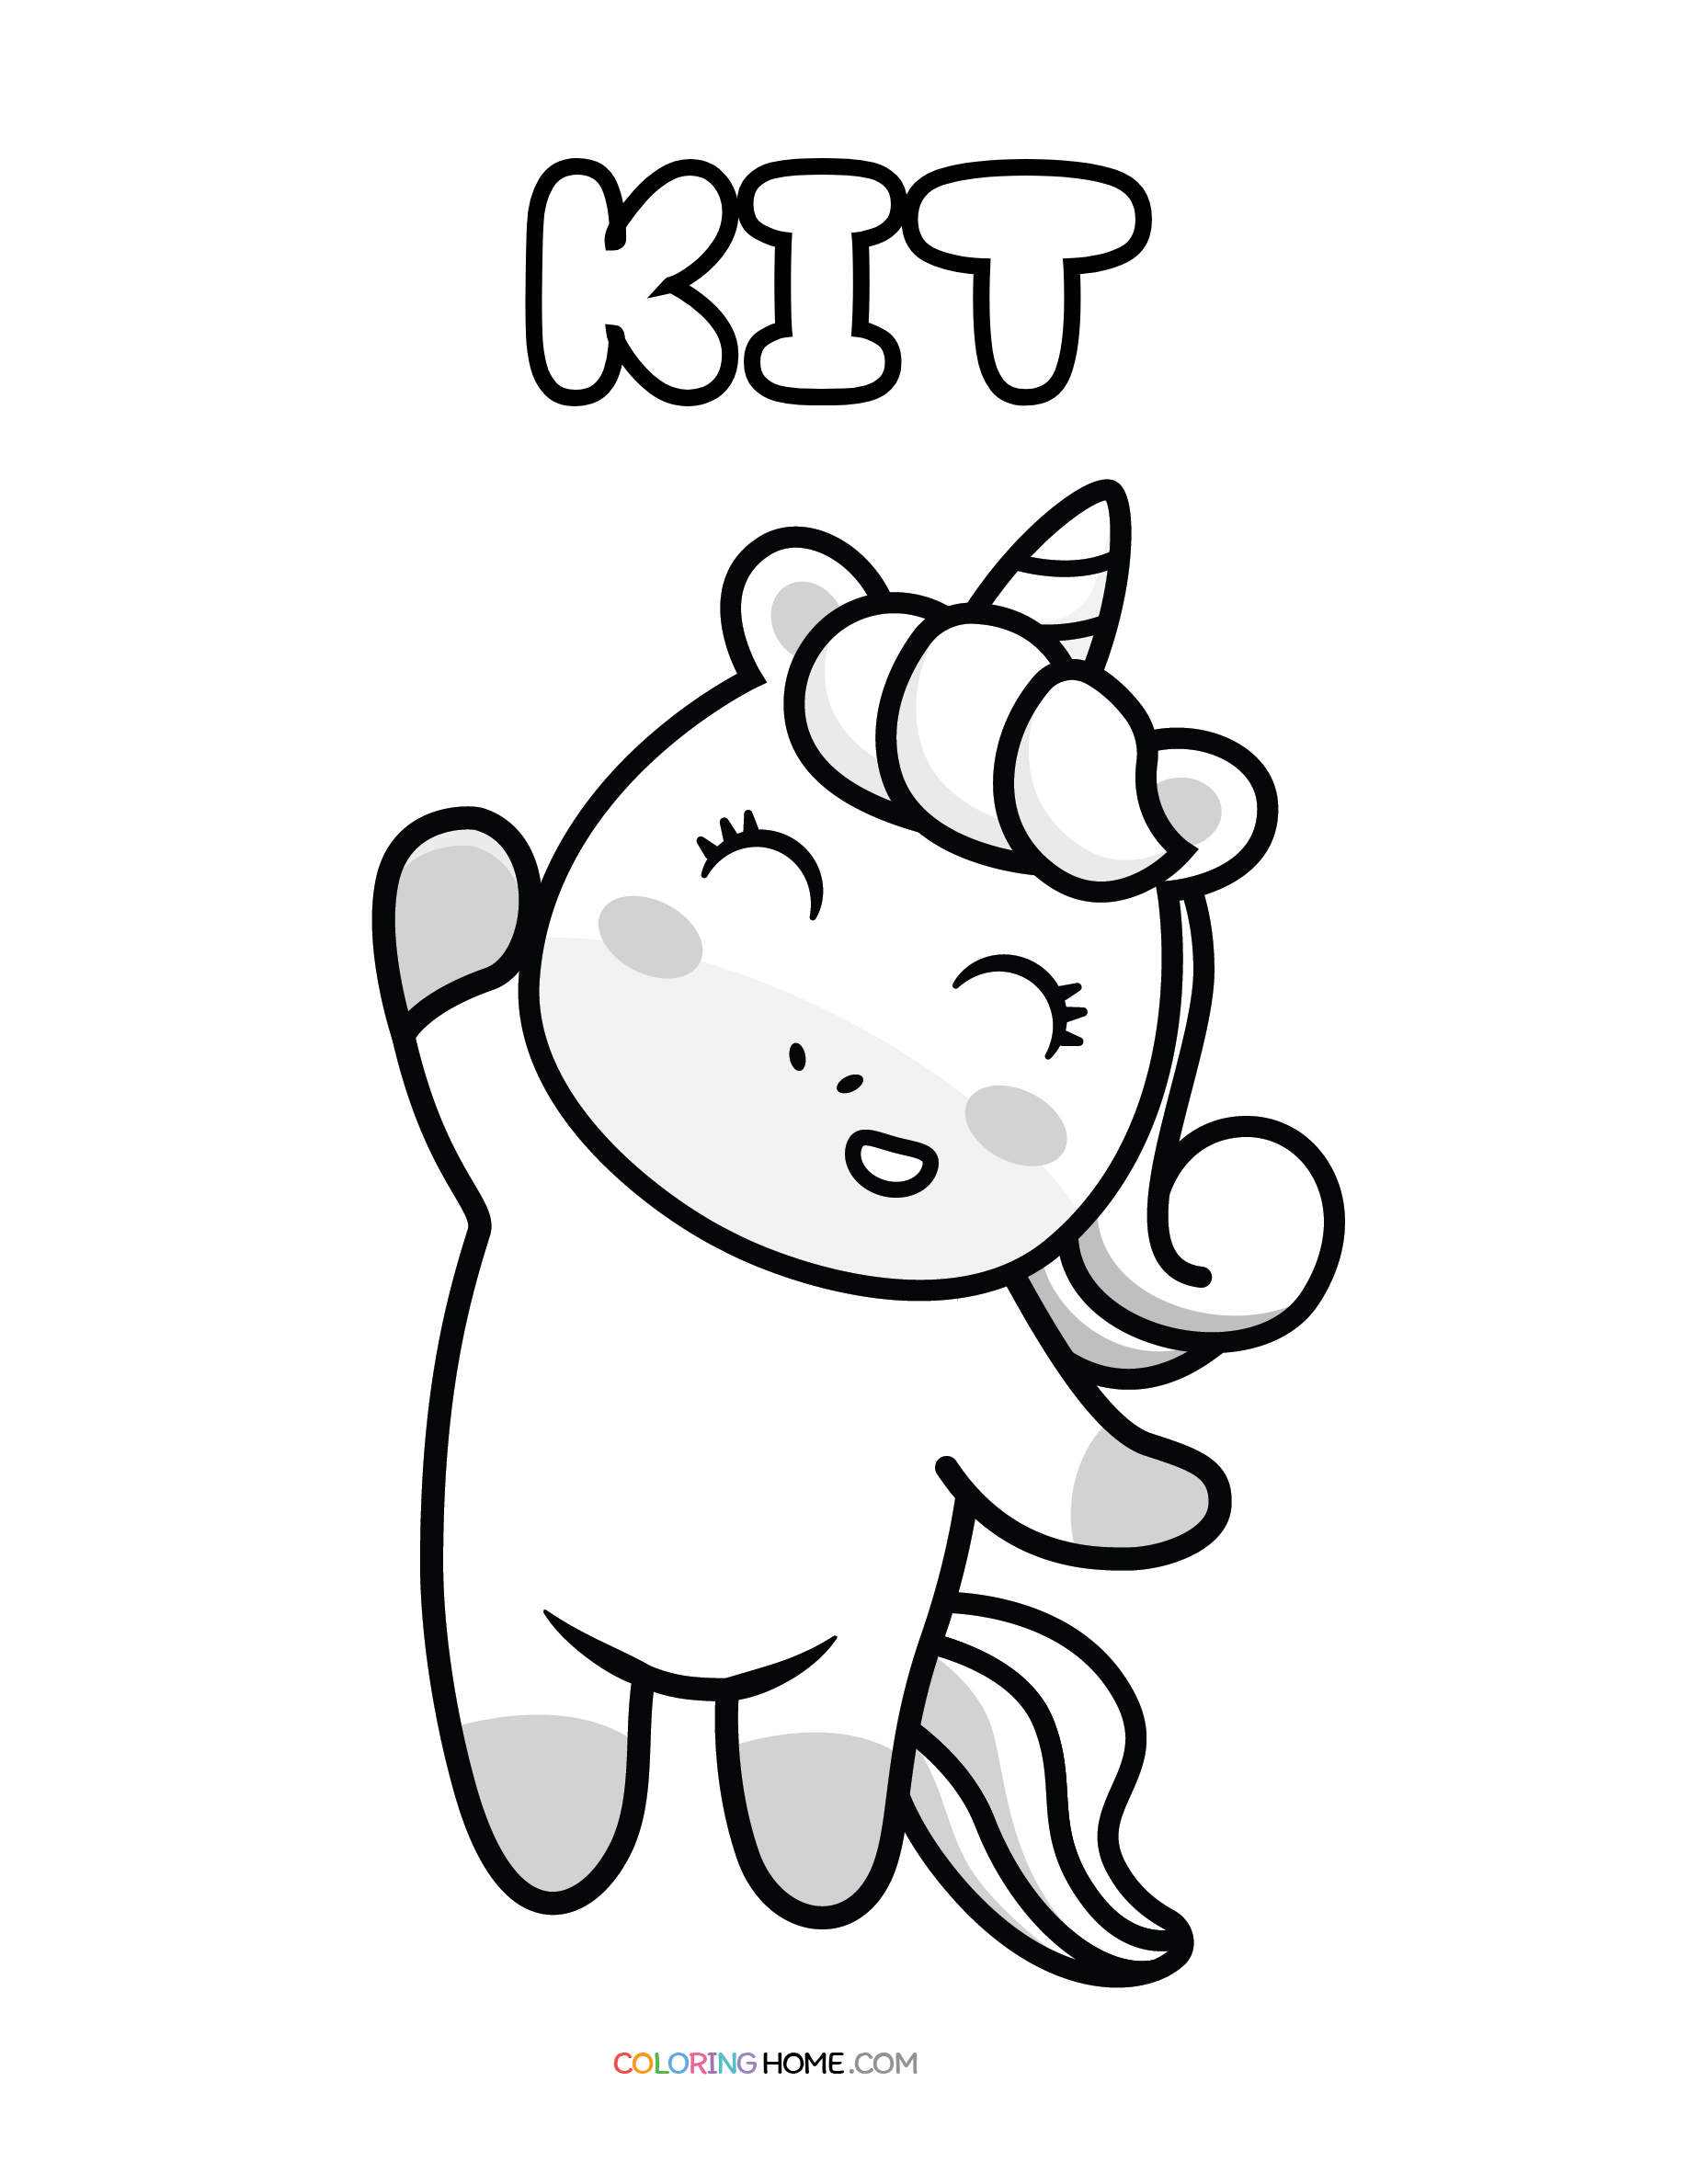 Kit unicorn coloring page